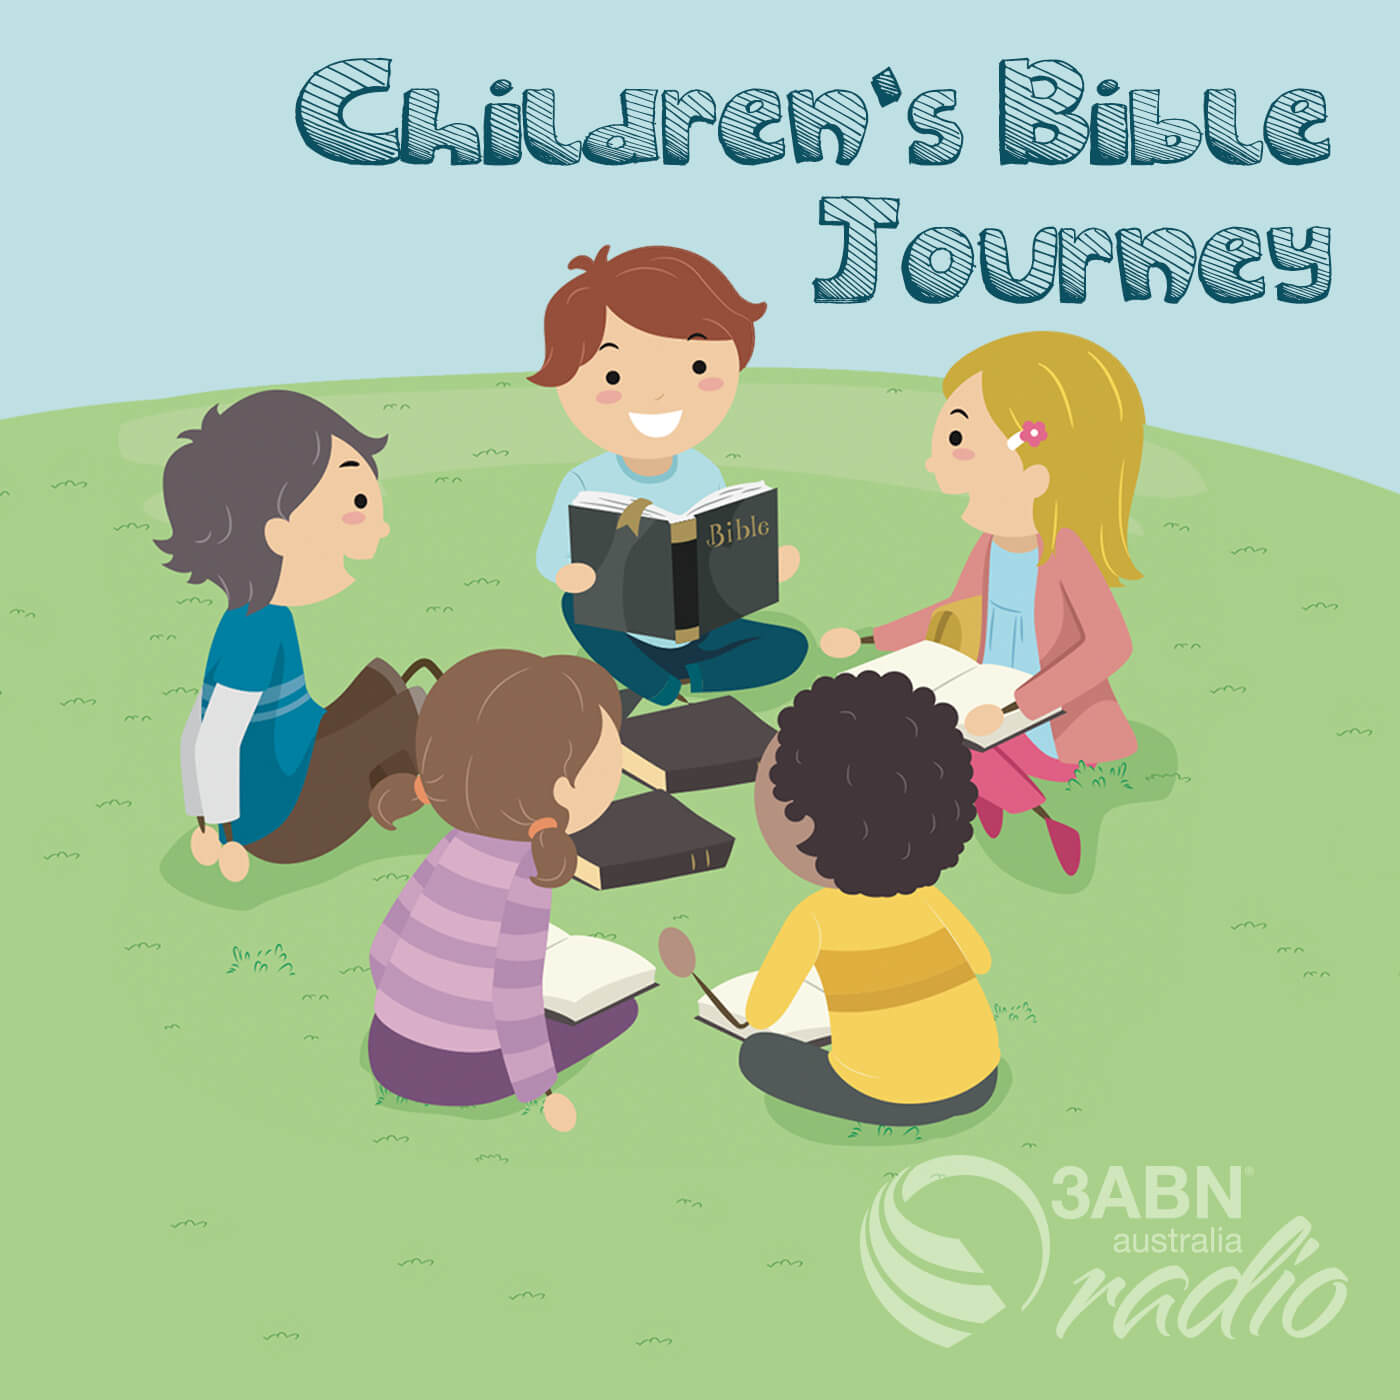 Children's Bible Journey - 2149